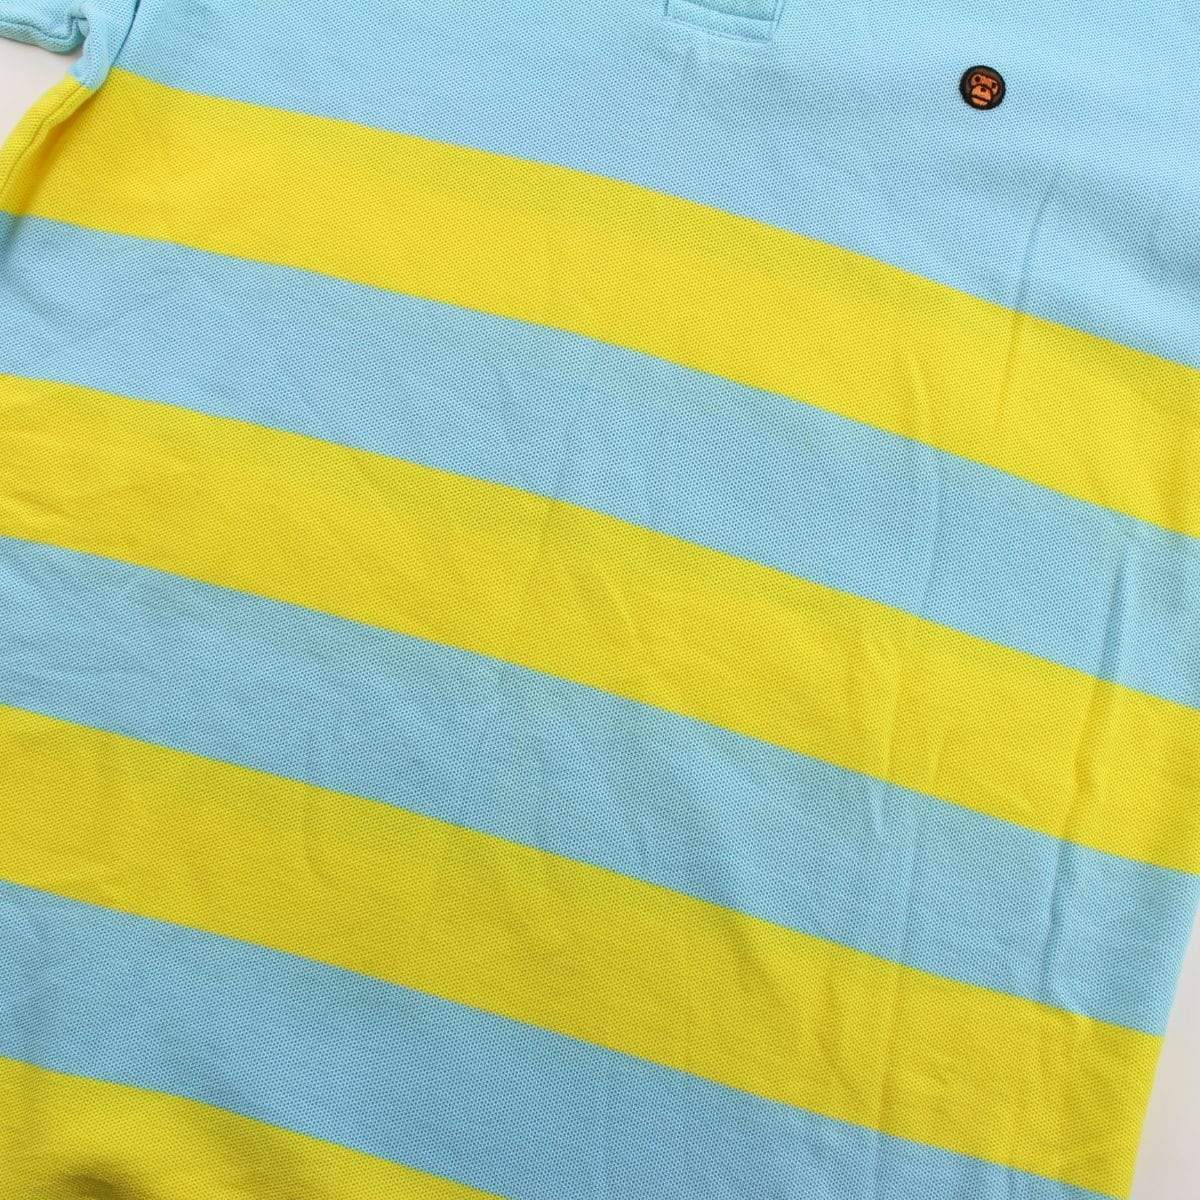 Bape Baby Milo Polo Shirt Blue Yellow Stripe - SaruGeneral